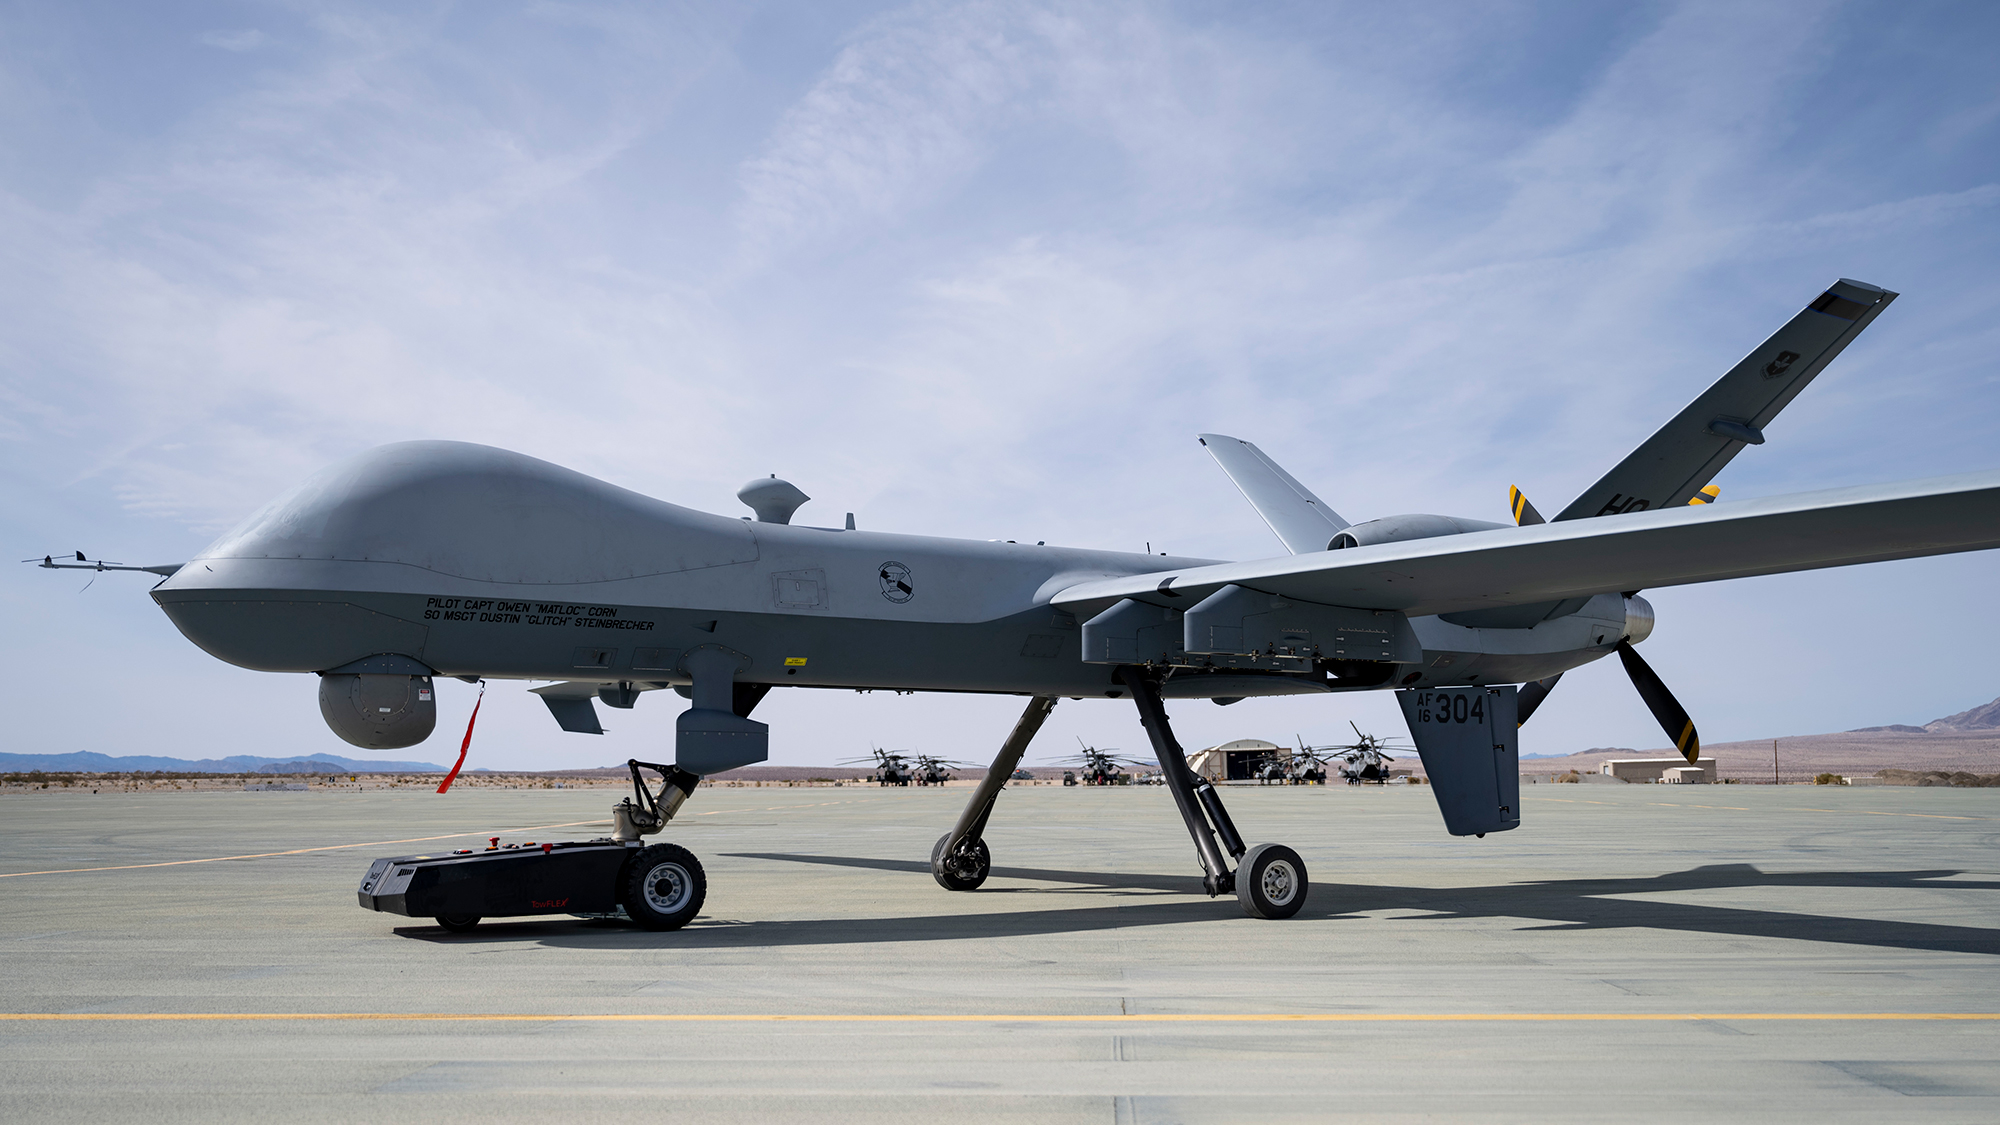 Inilah yang kami ketahui tentang insiden antara drone Amerika dan pesawat tempur Rusia